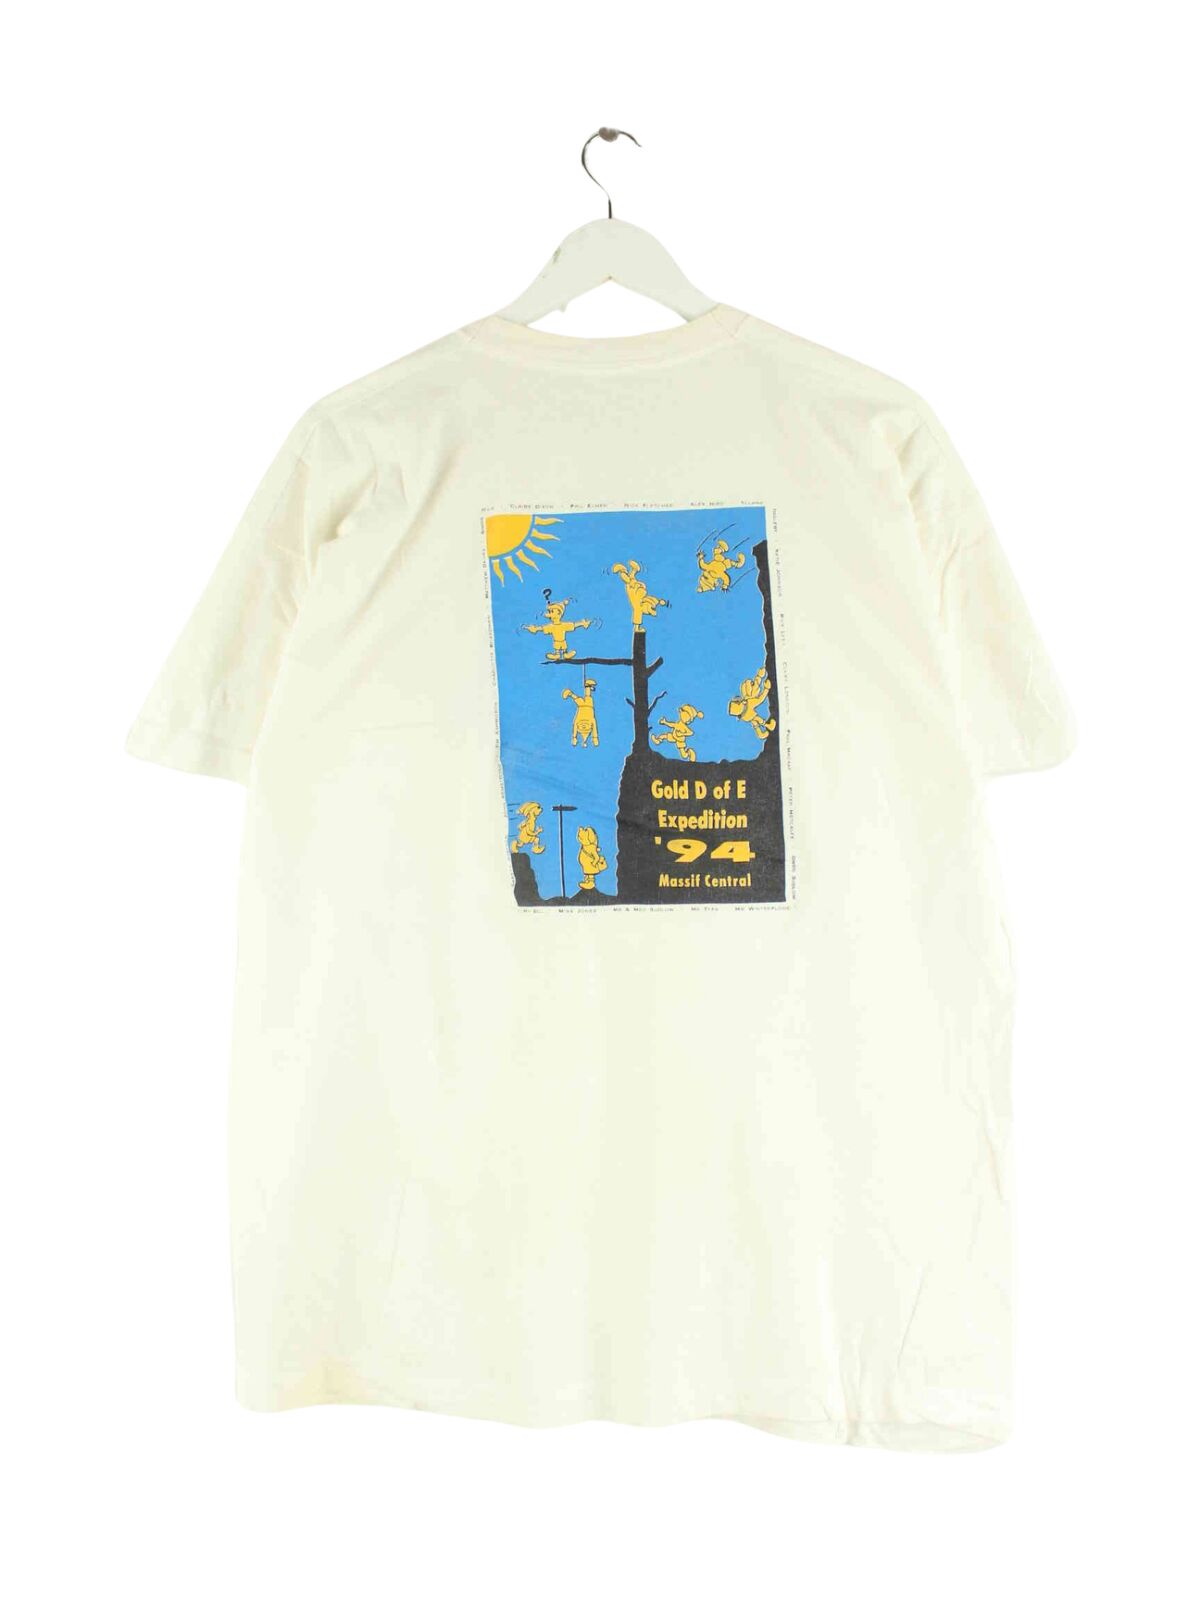 Vintage 1994 Expedition Print Single Stitched T-Shirt Beige L (back image)